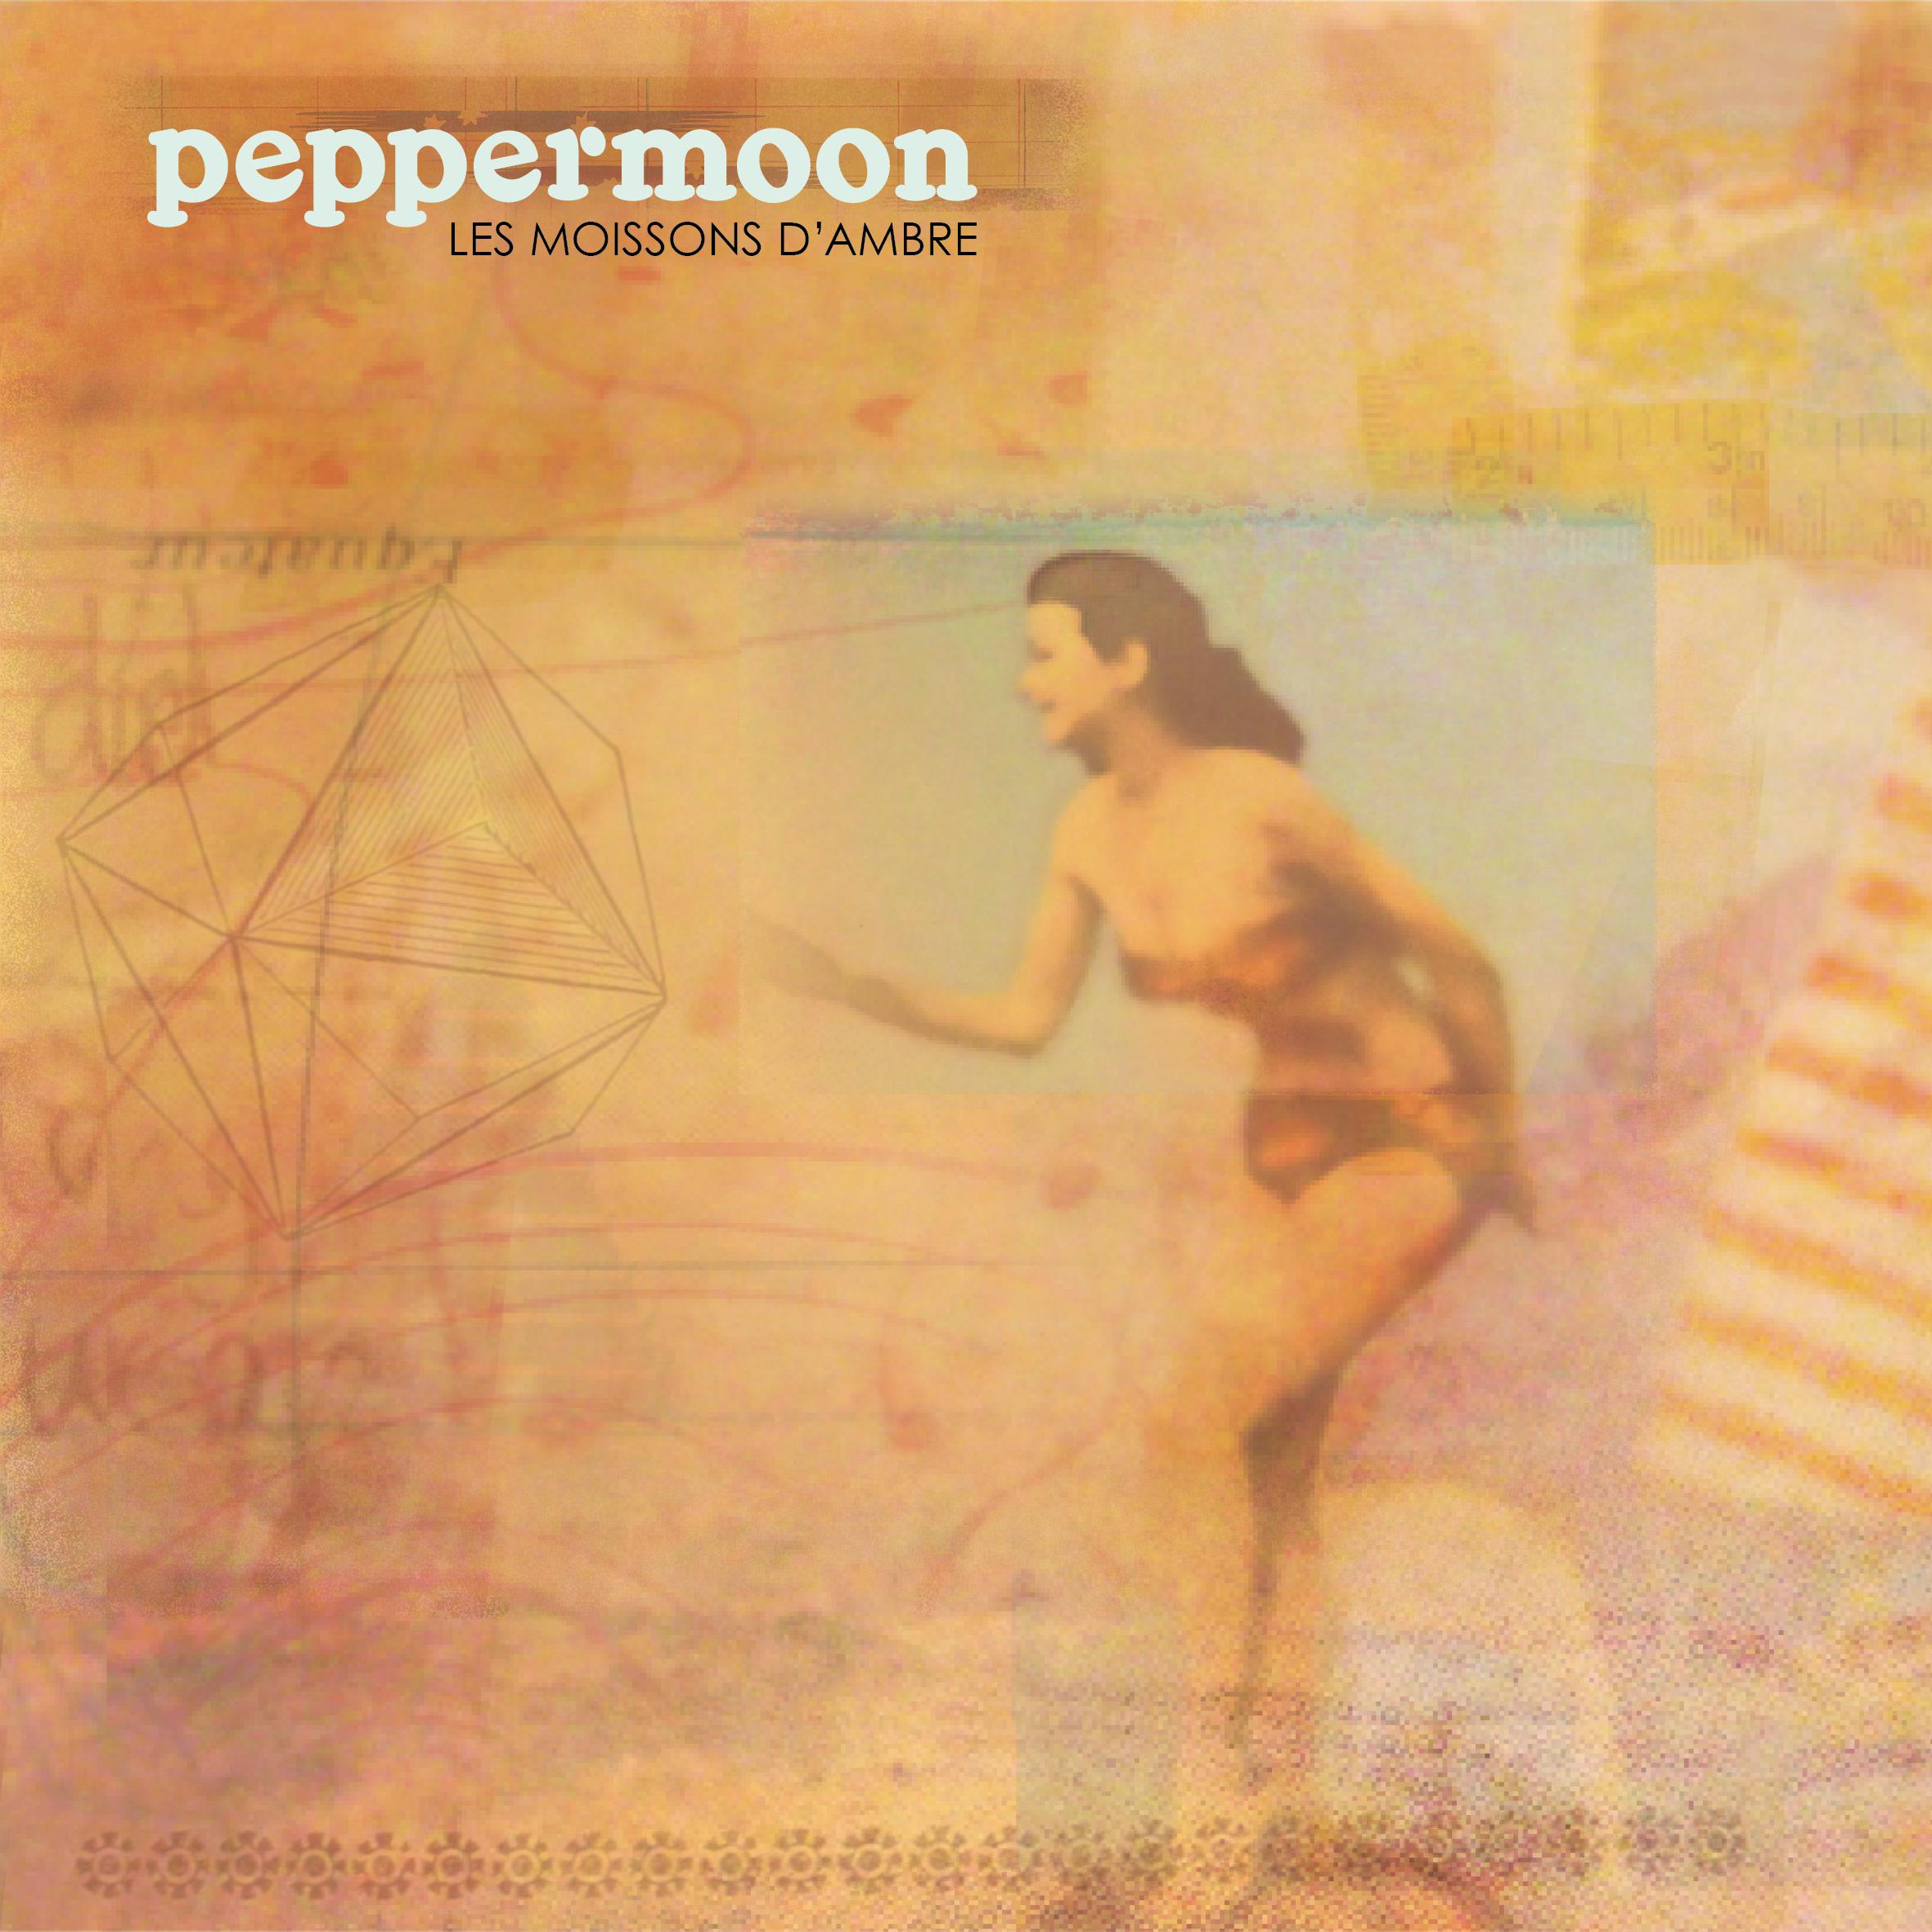 Peppermoon - Les moissons d'ambre